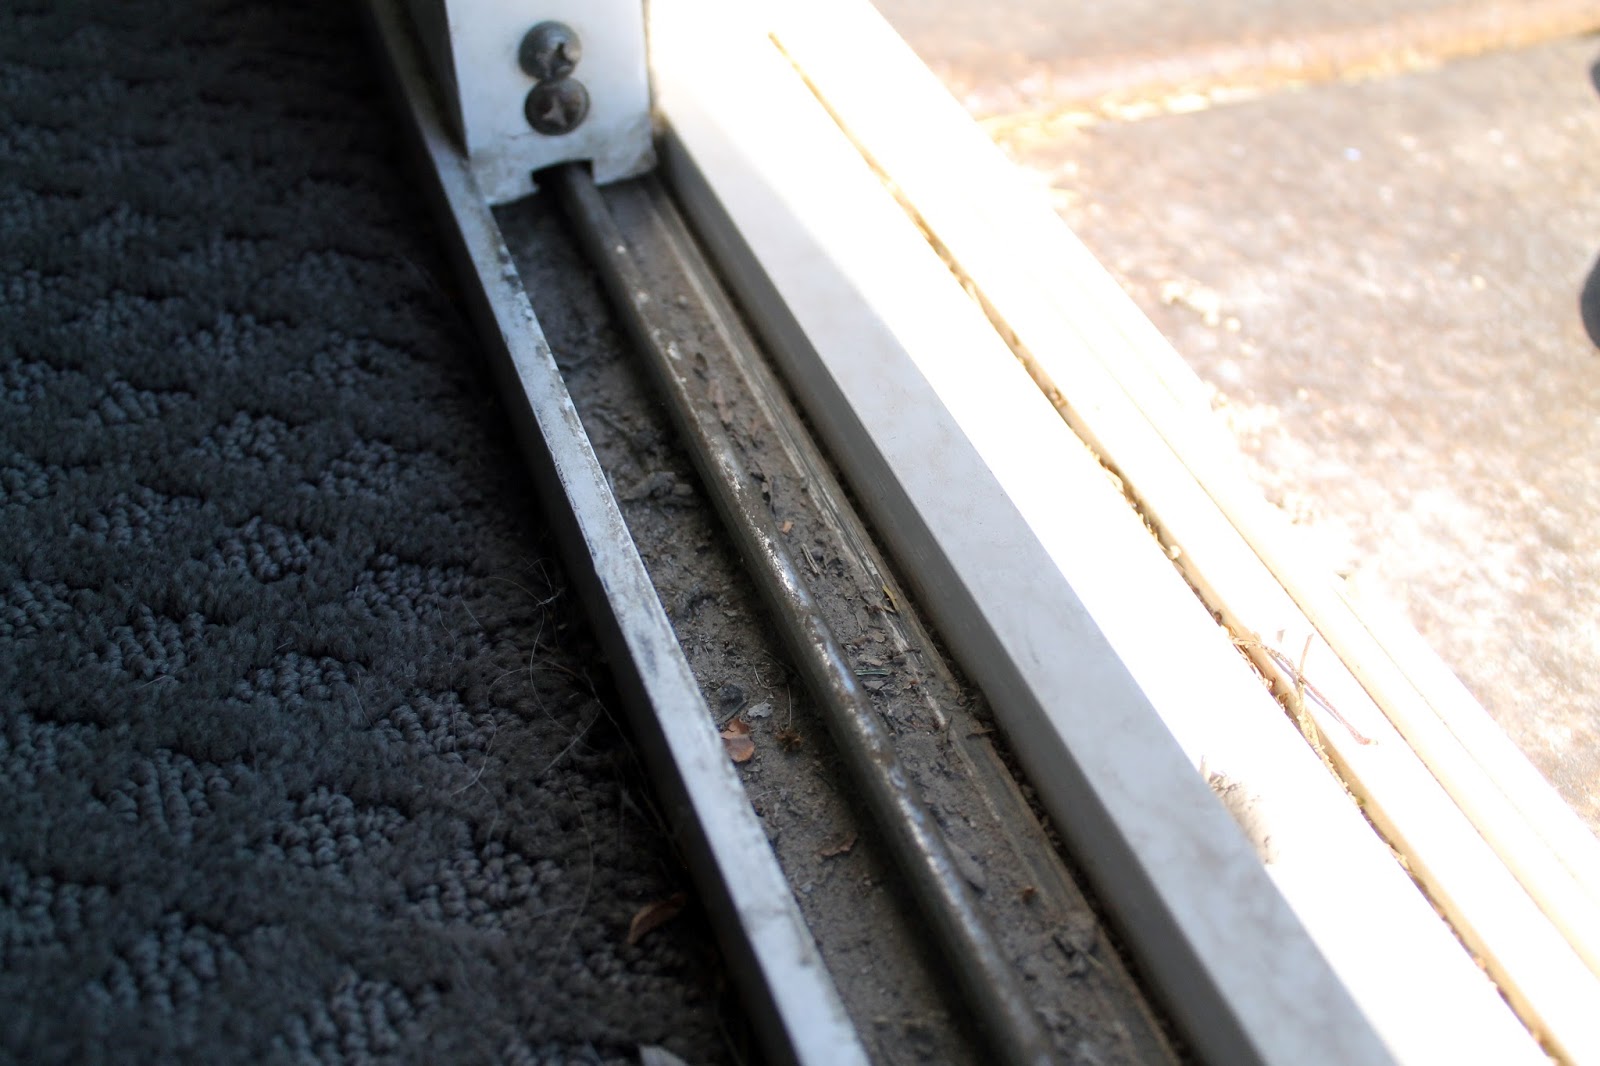 Cleaning Sliding Glass Door Tracks